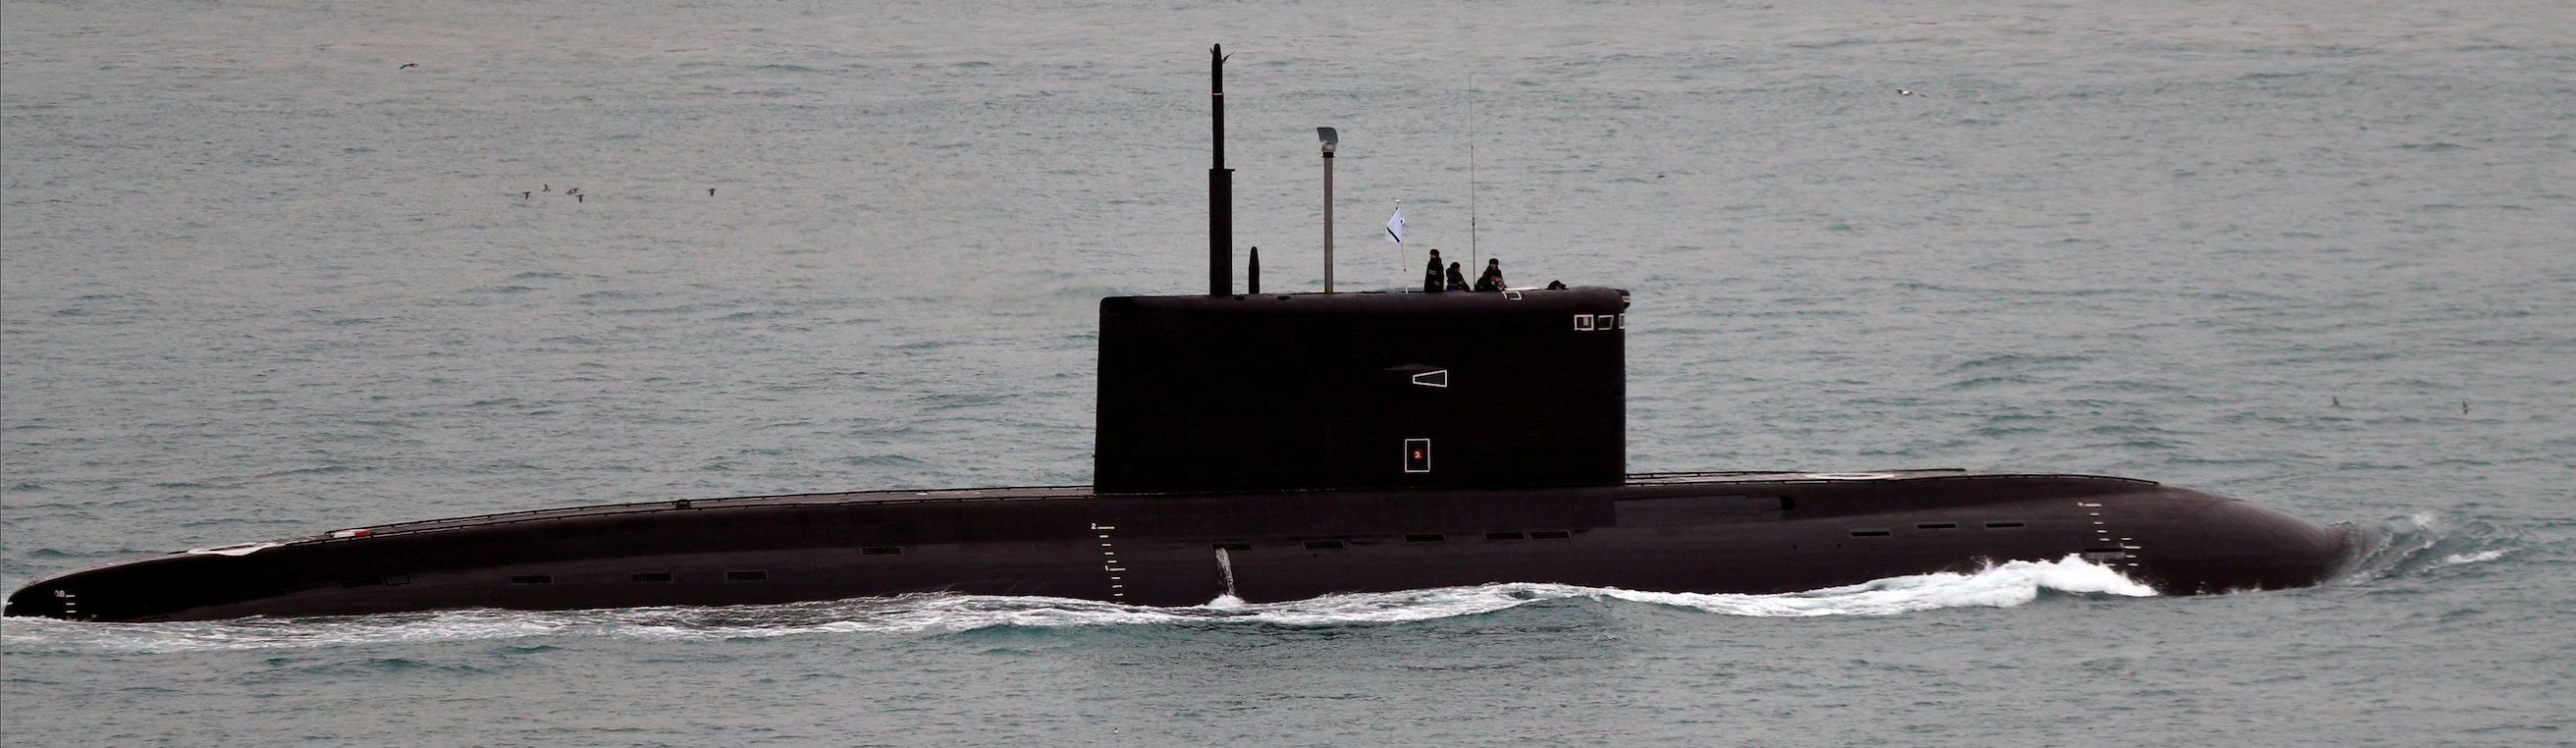 The Russian Kilo-class diesel-electric submarine Krasnodar sails in the Bosphorus, on its way to the Mediterranean Sea